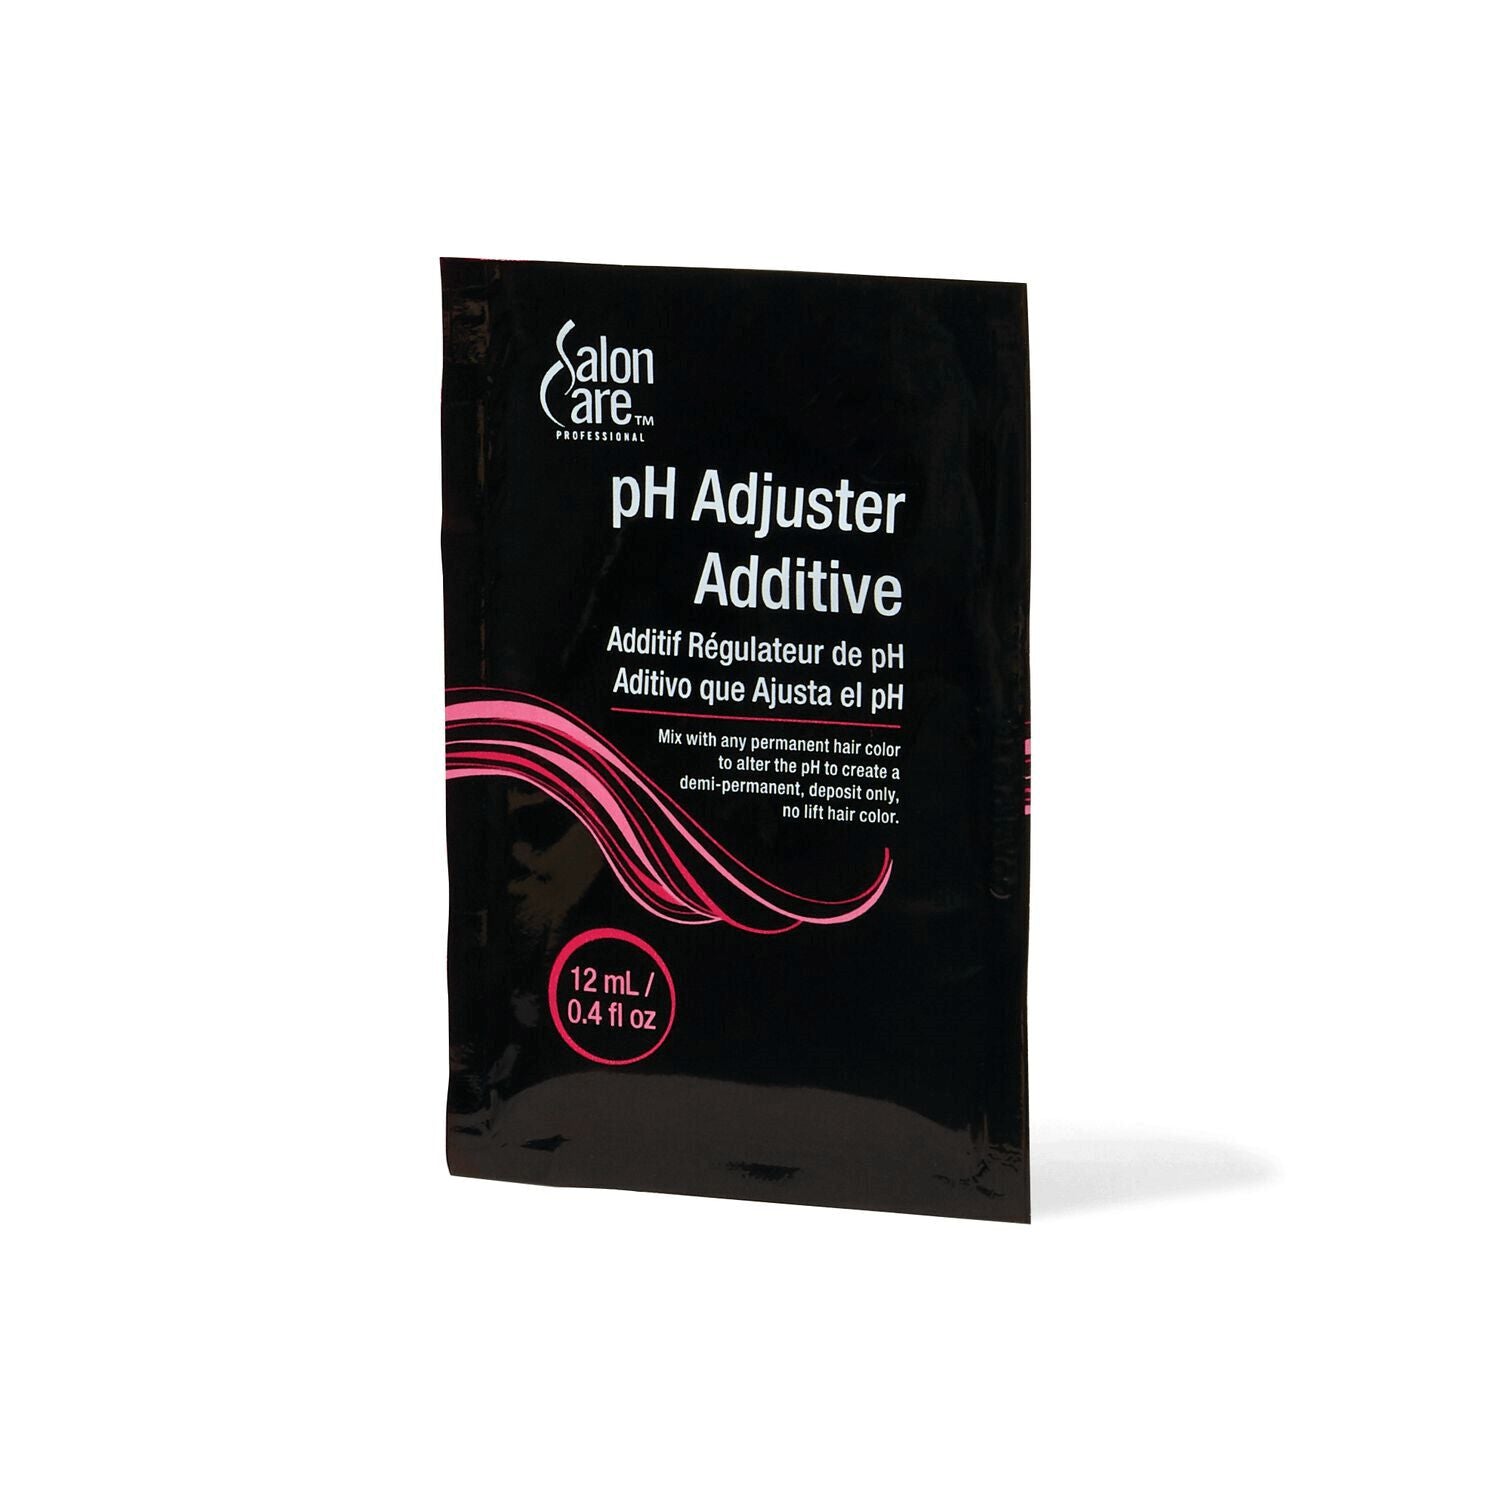 Salon Care pH Adjuster